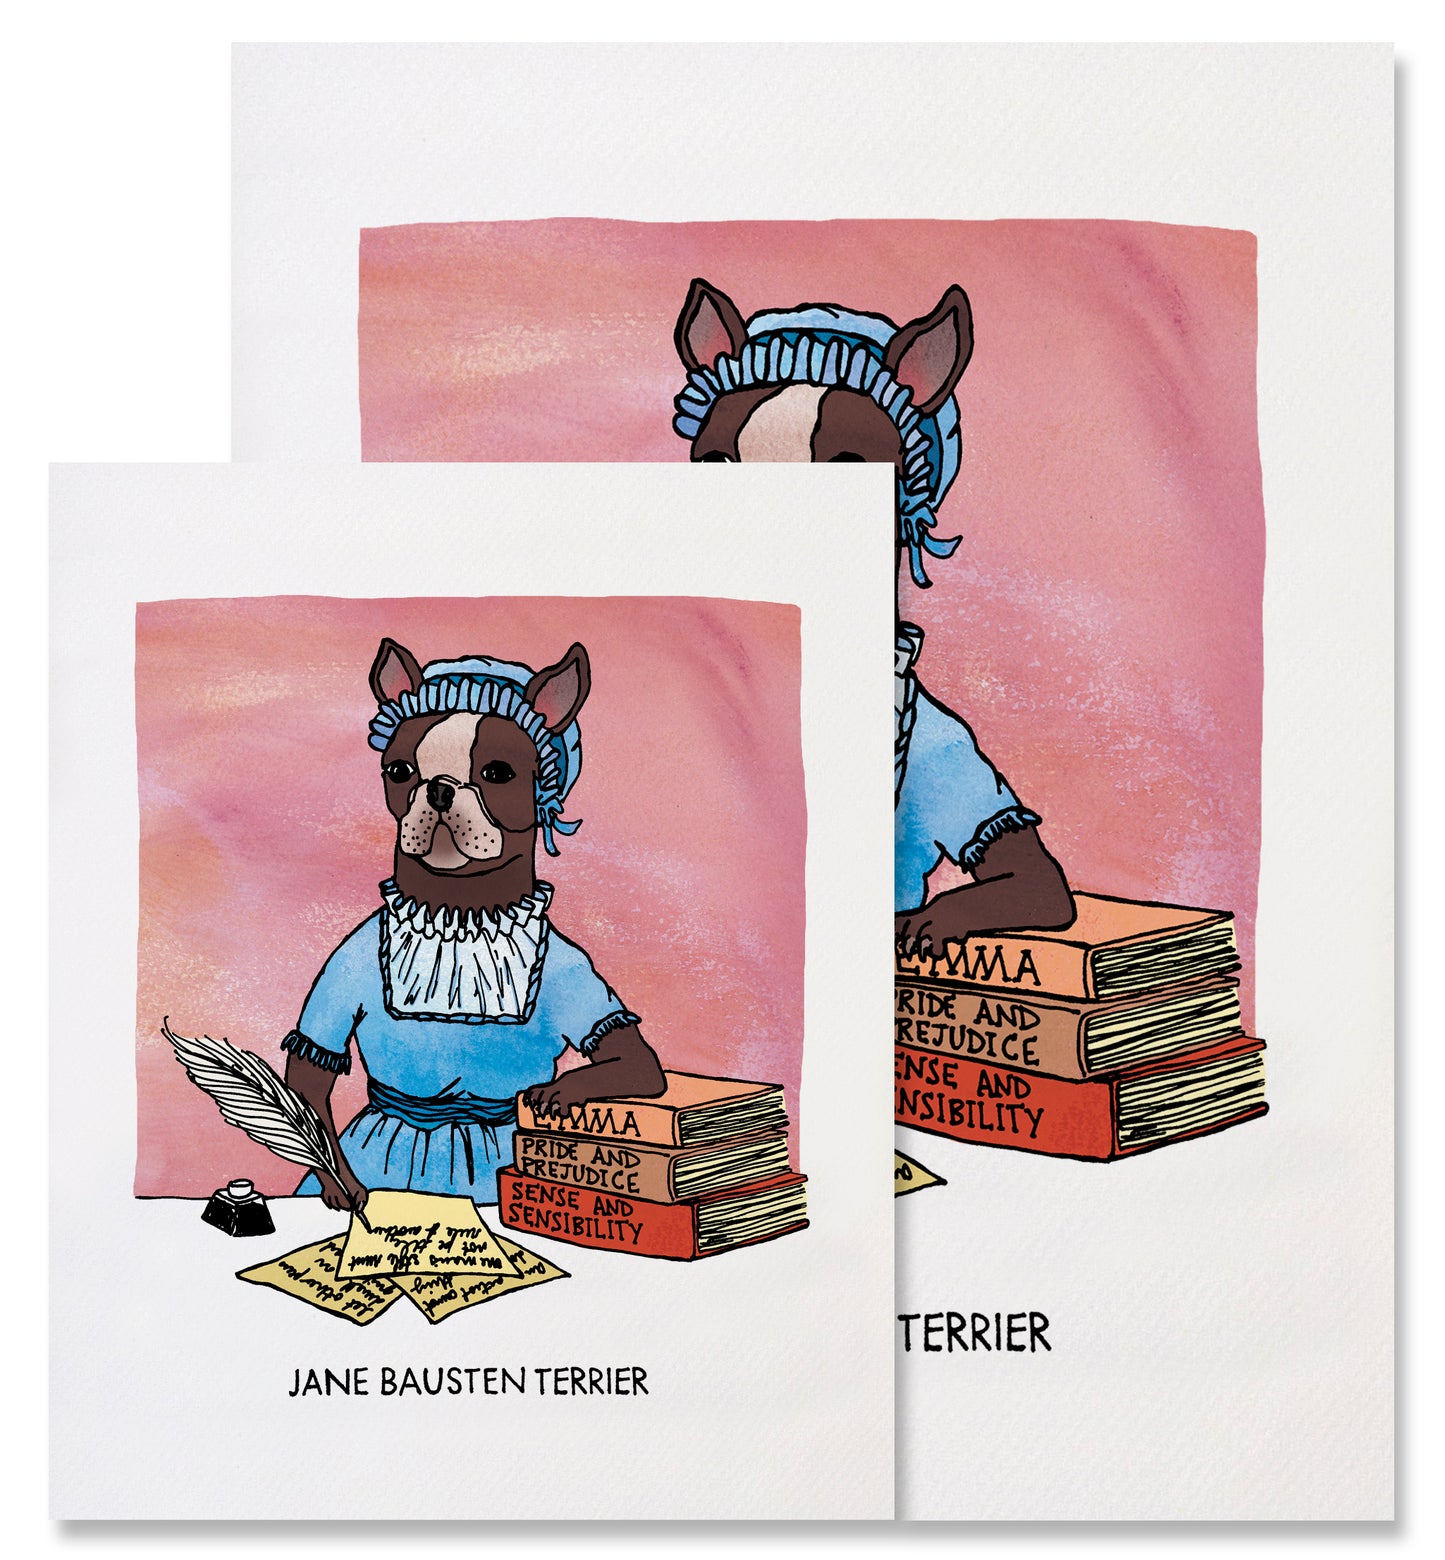 Jane Bausten Terrier -  Illustrated Funny Pun Everyday Card